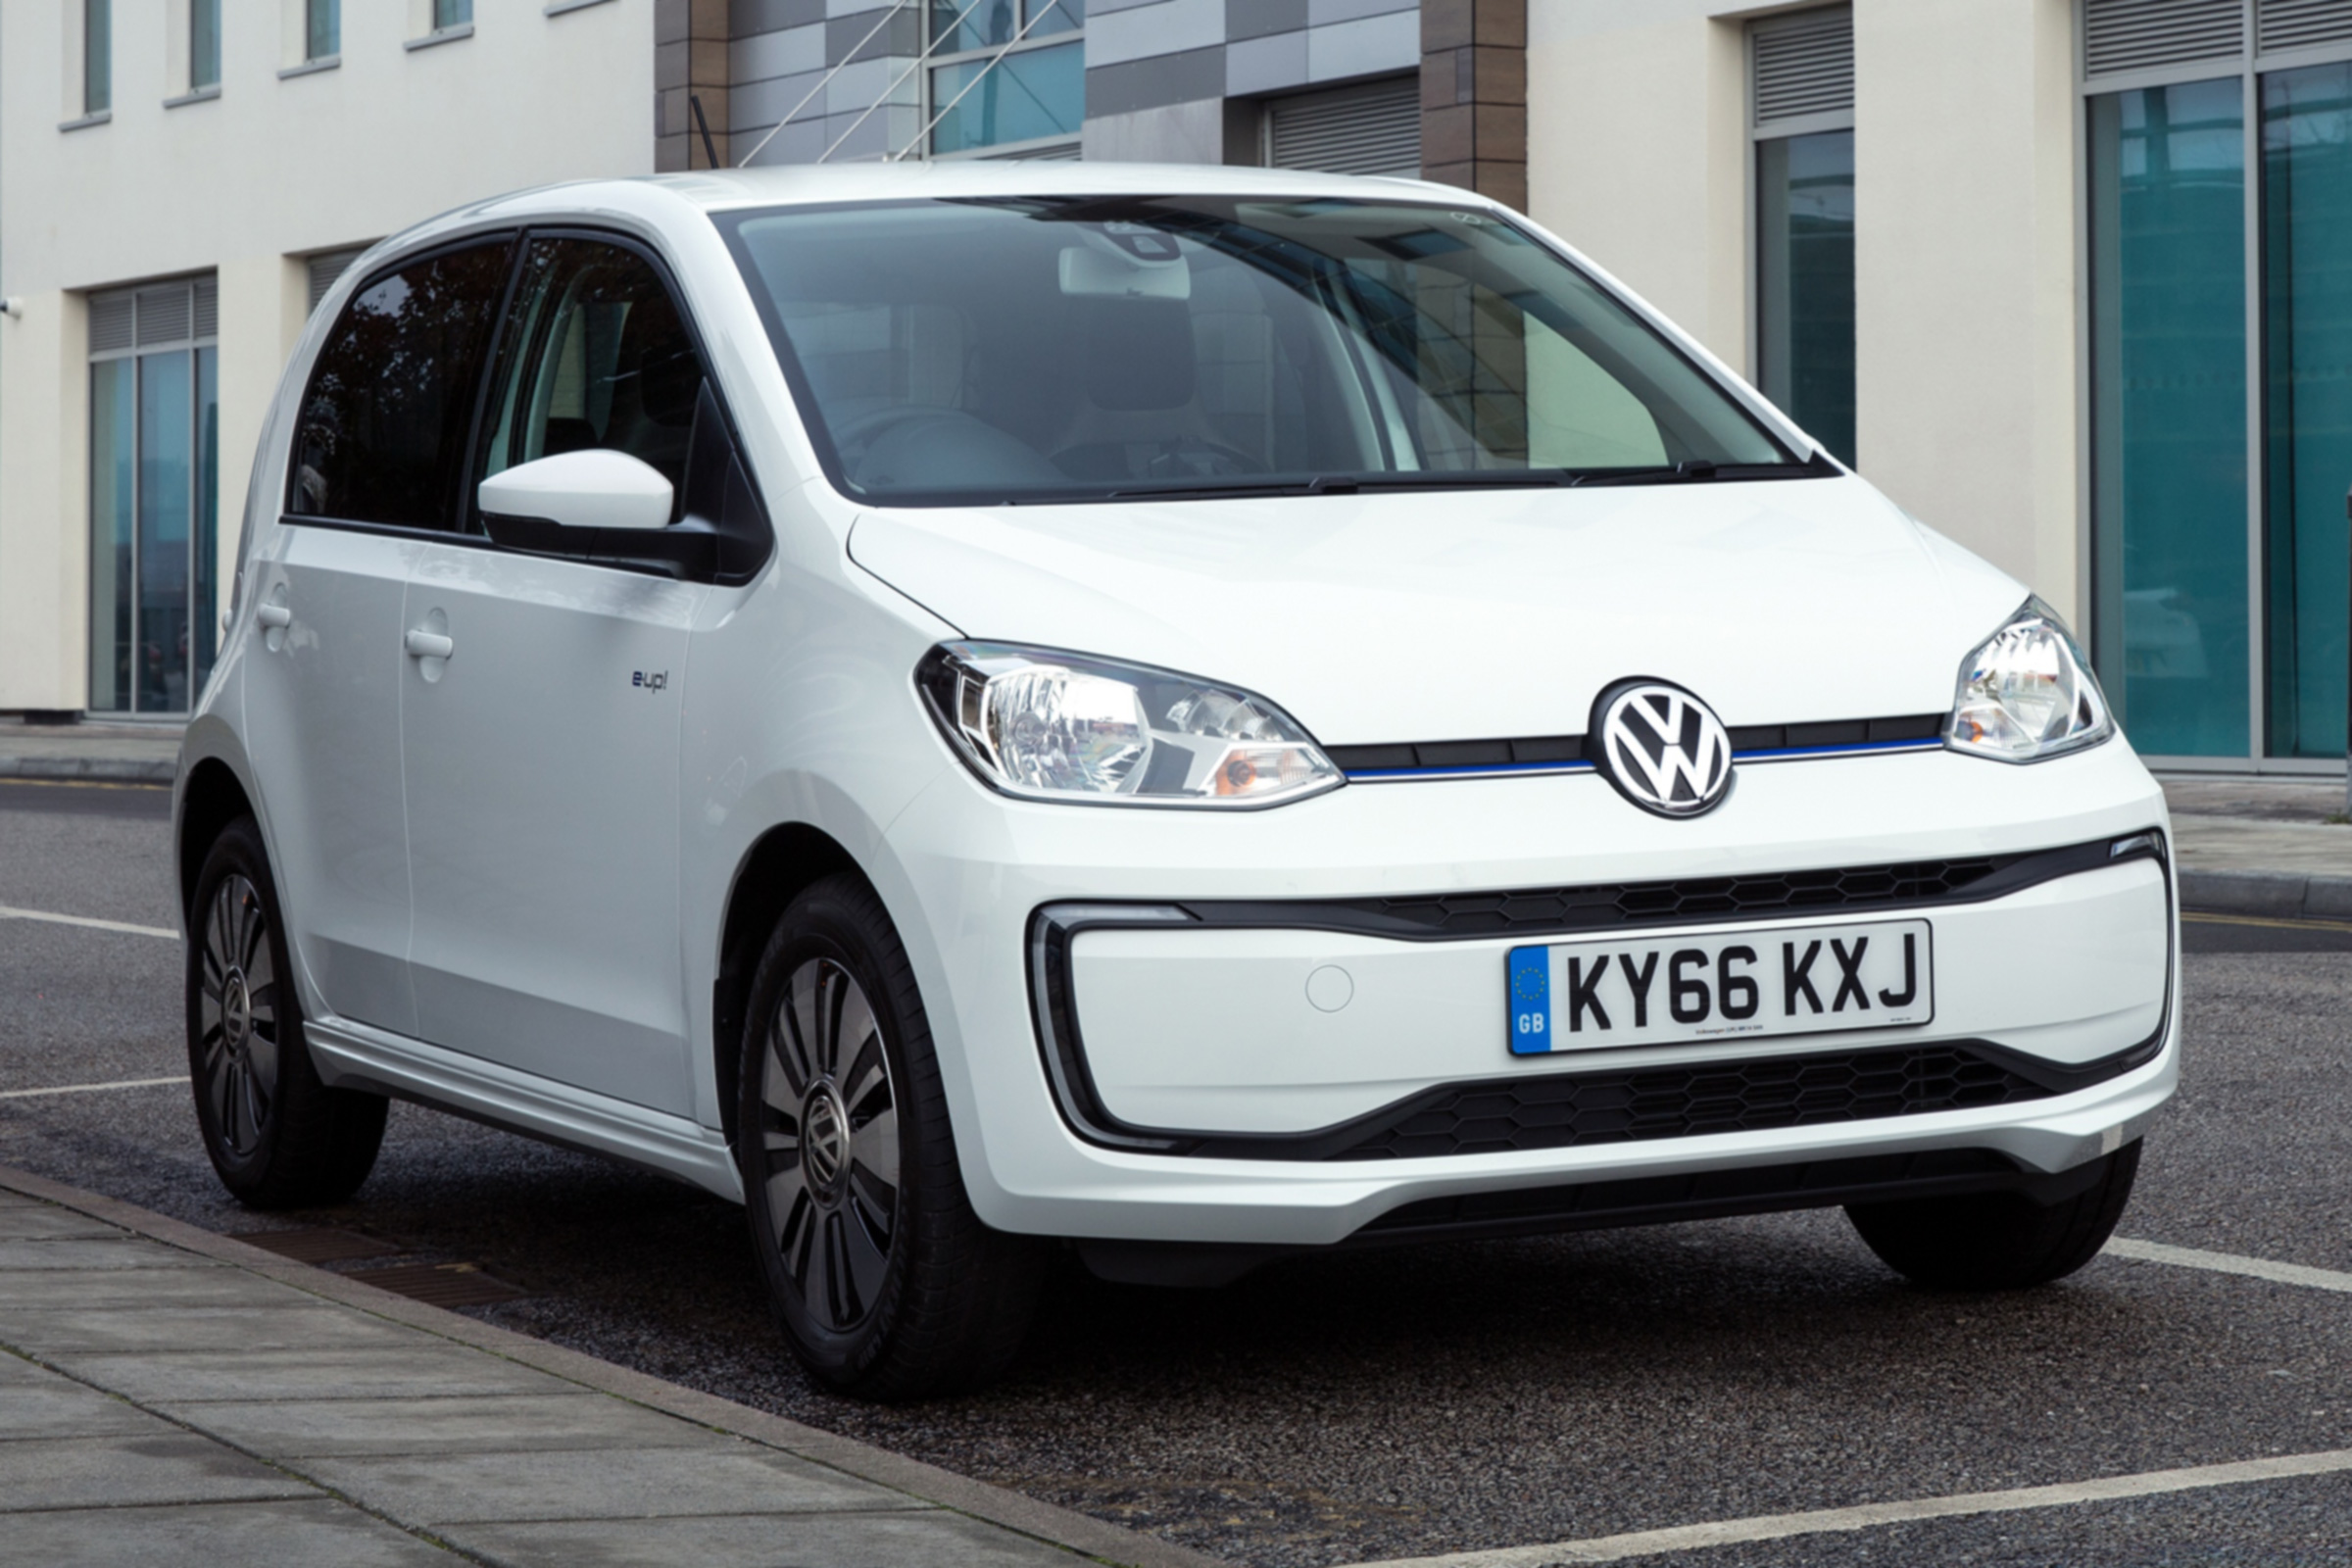 New electric Volkswagen eup! with 'extended range